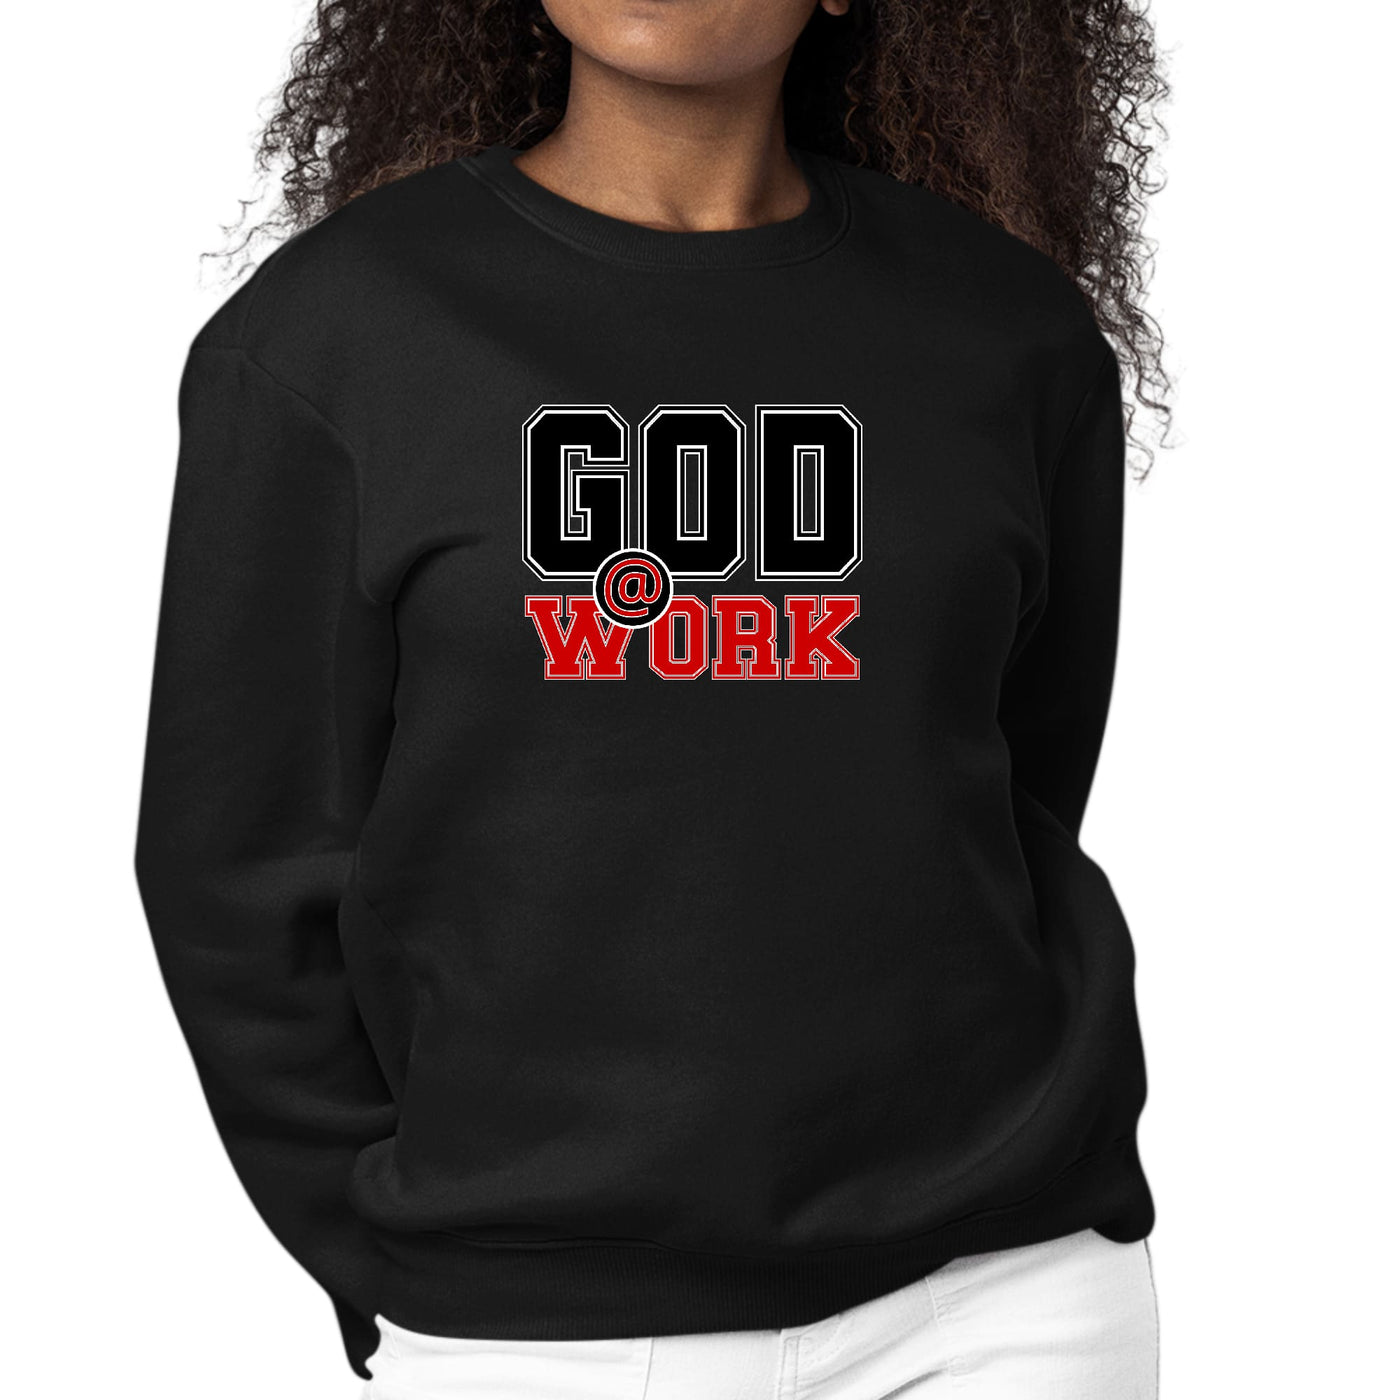 Womens Graphic Sweatshirt God @ Work Black And Red Print - Womens | Sweatshirts